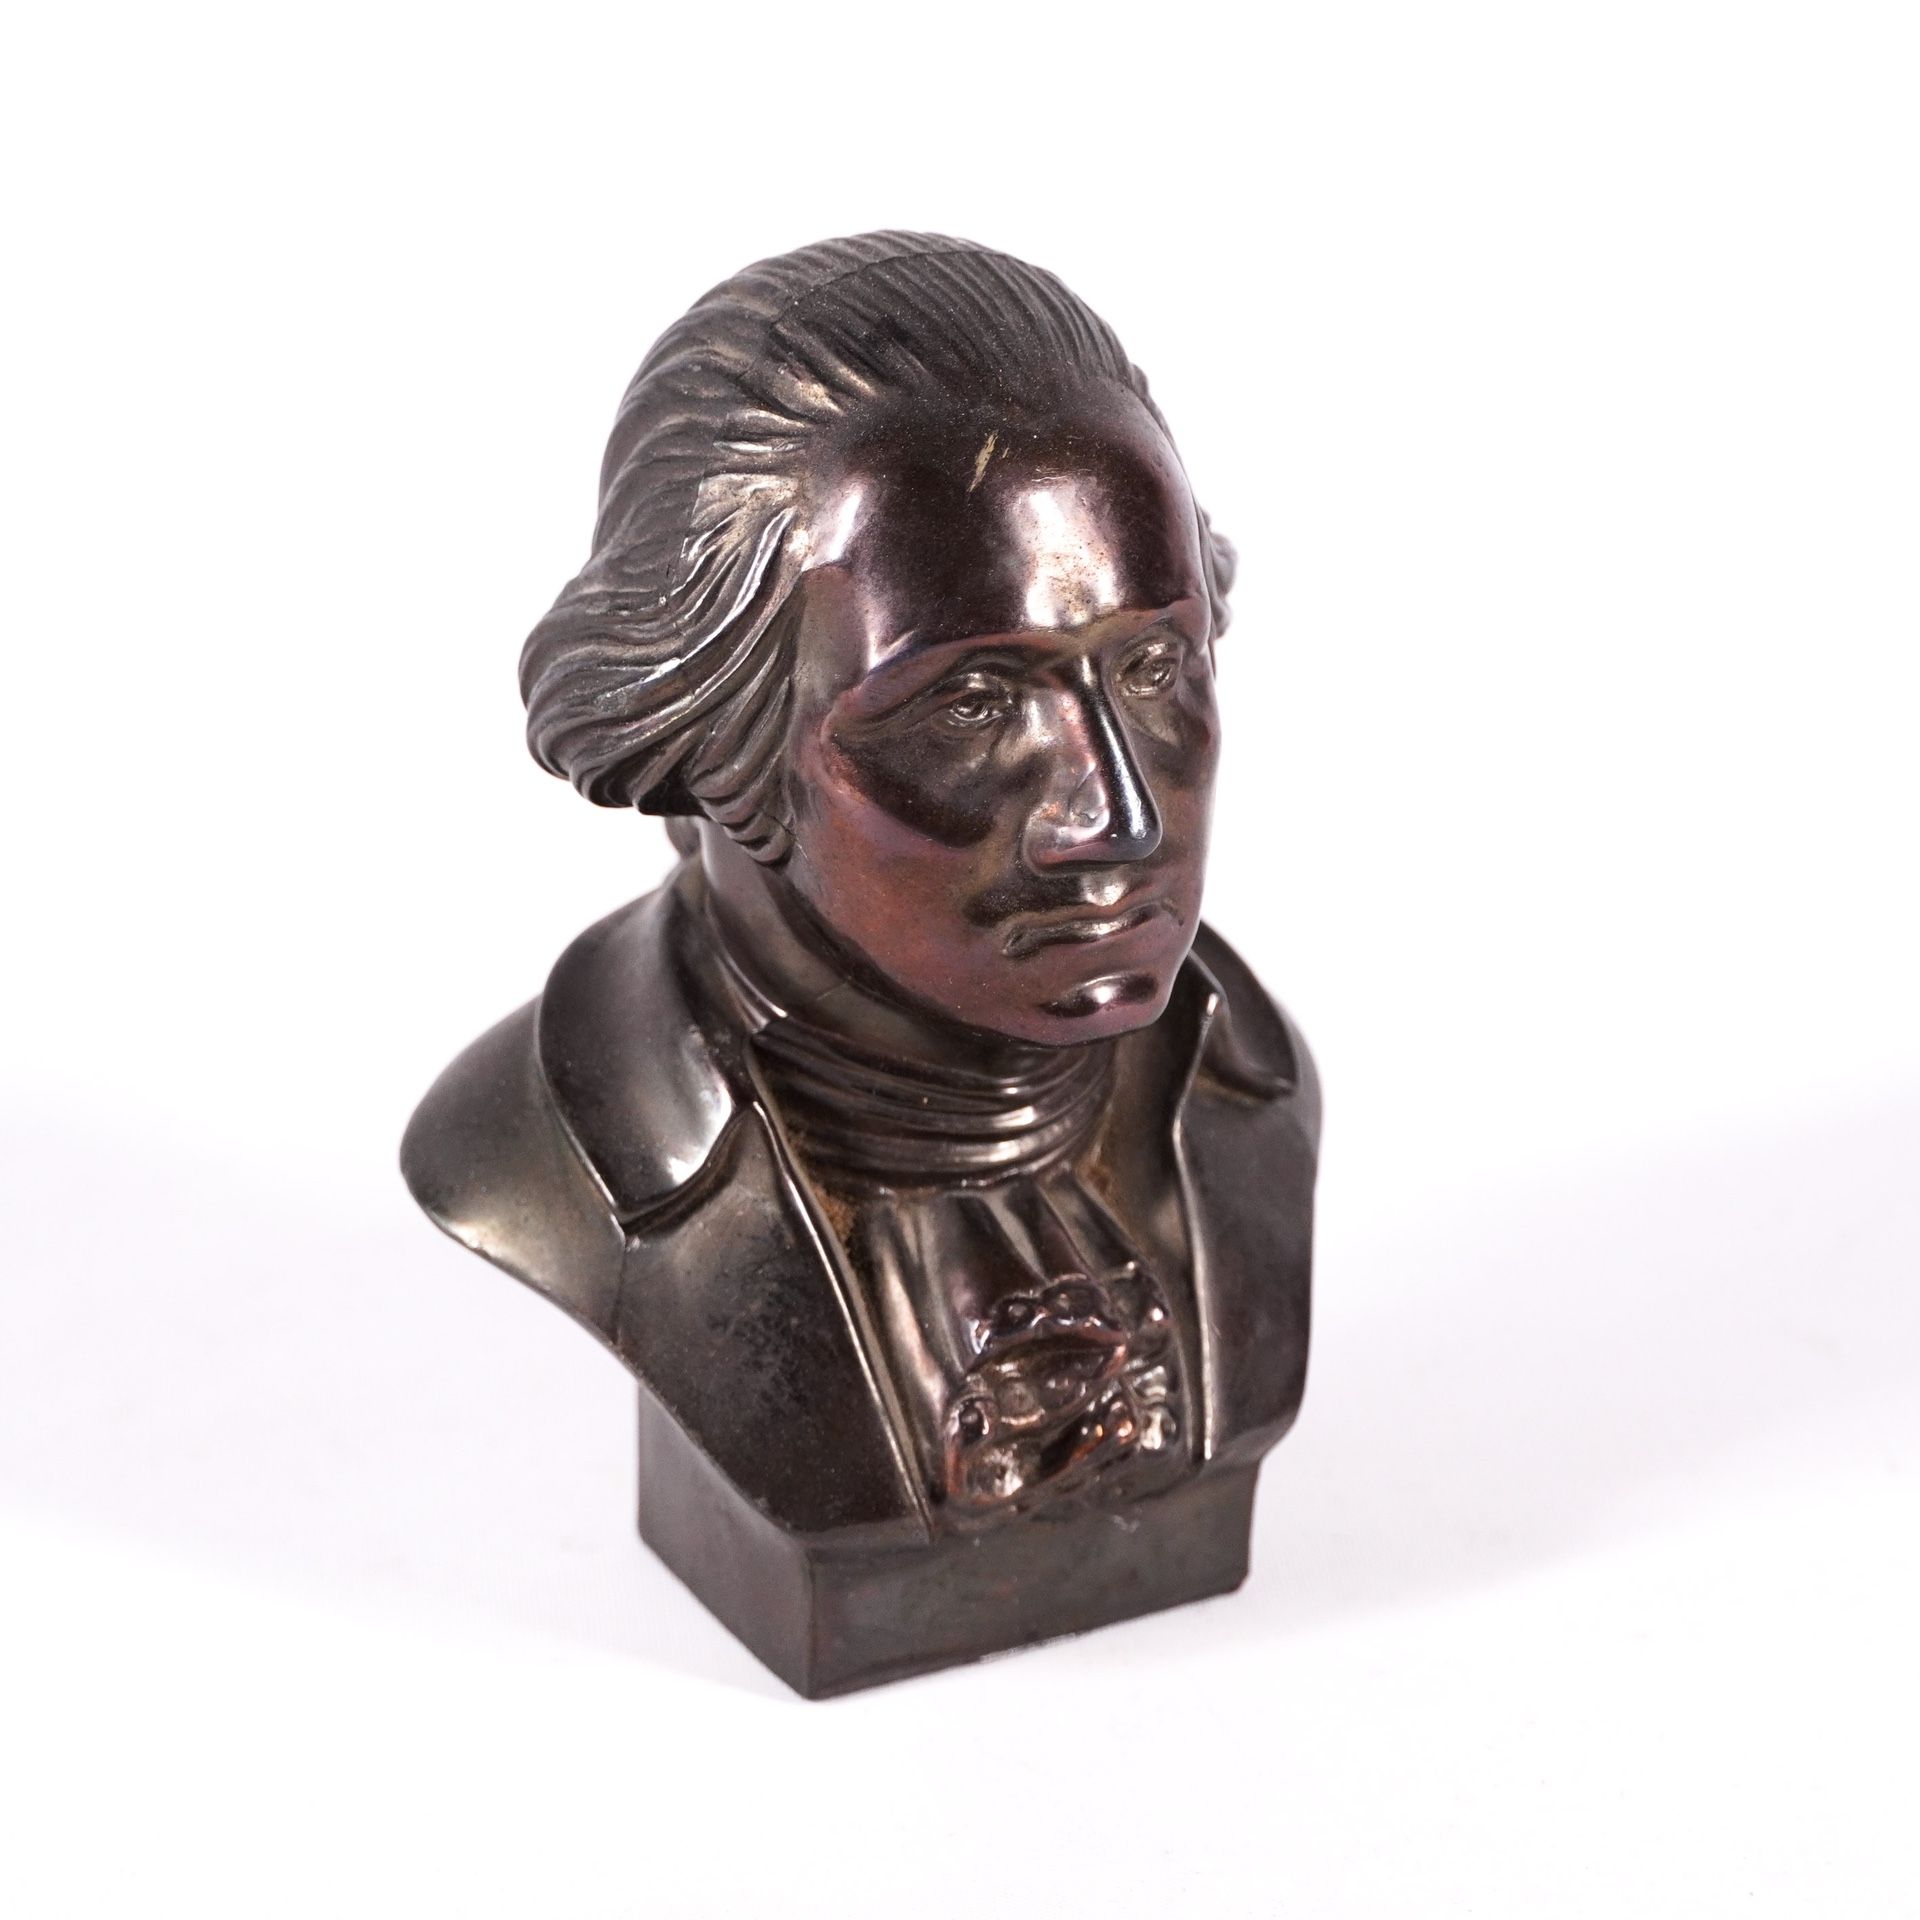 4" Metal President George Washington Bust Figurine Statue Sculpture Artwork Art